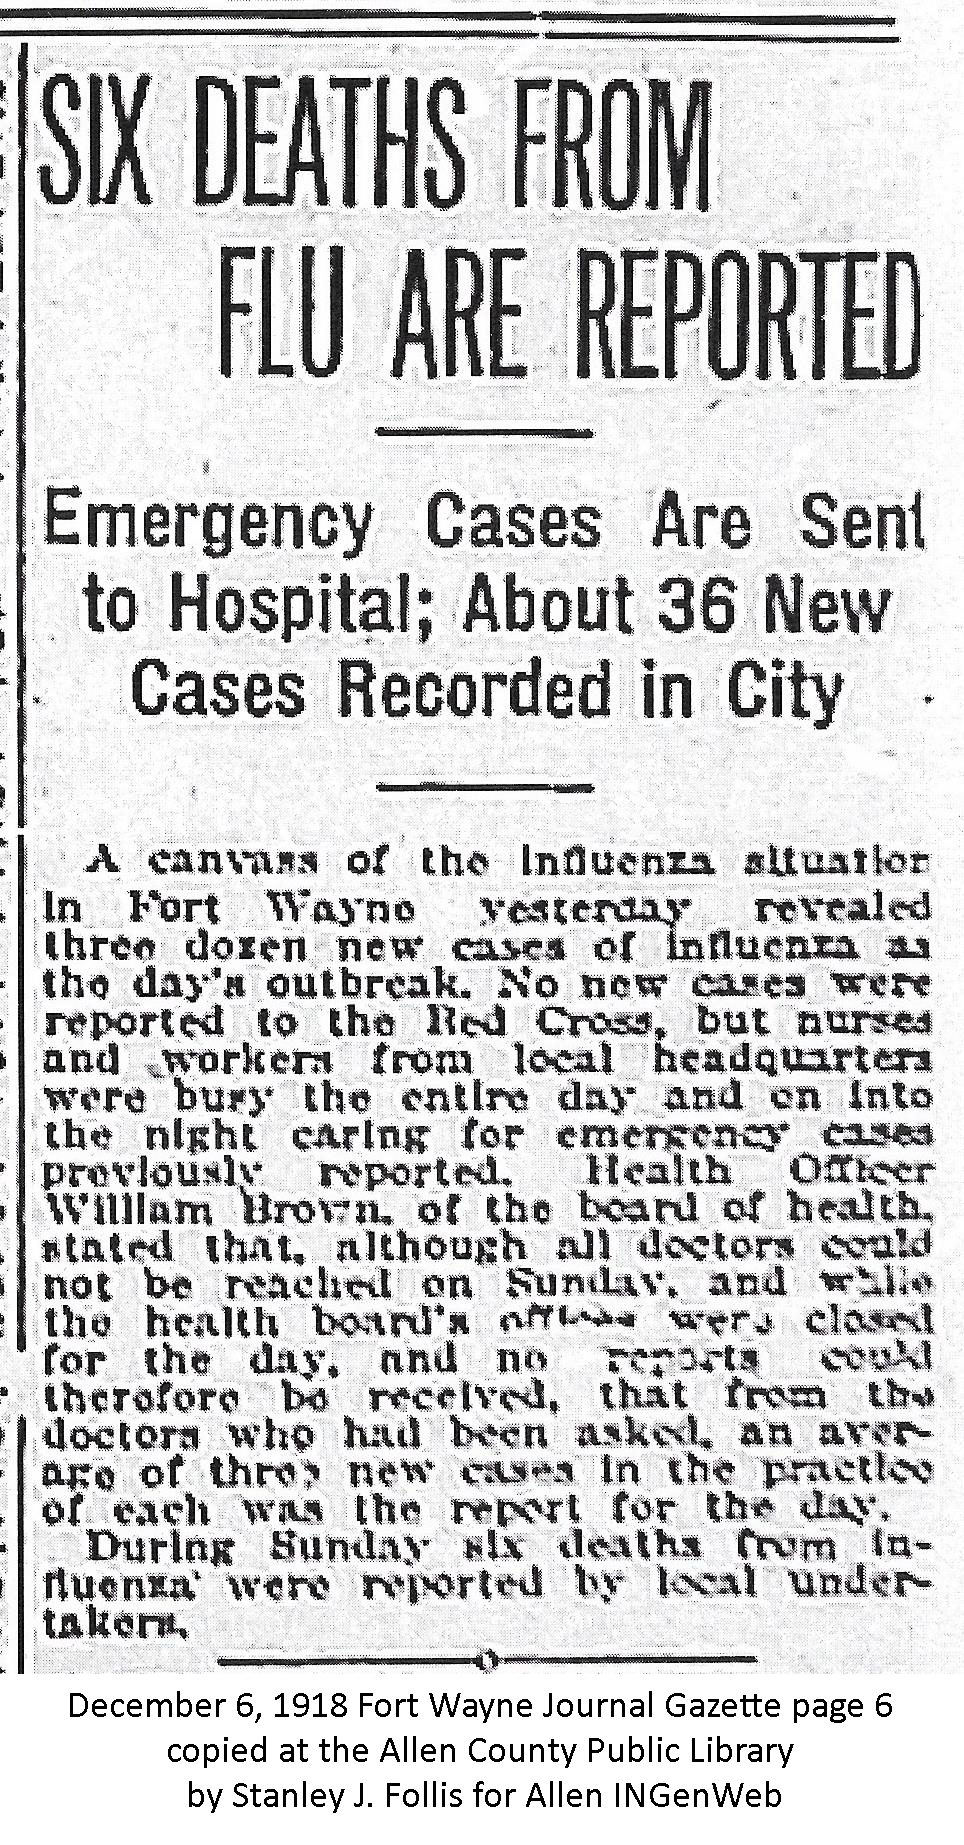 1918 flu deaths